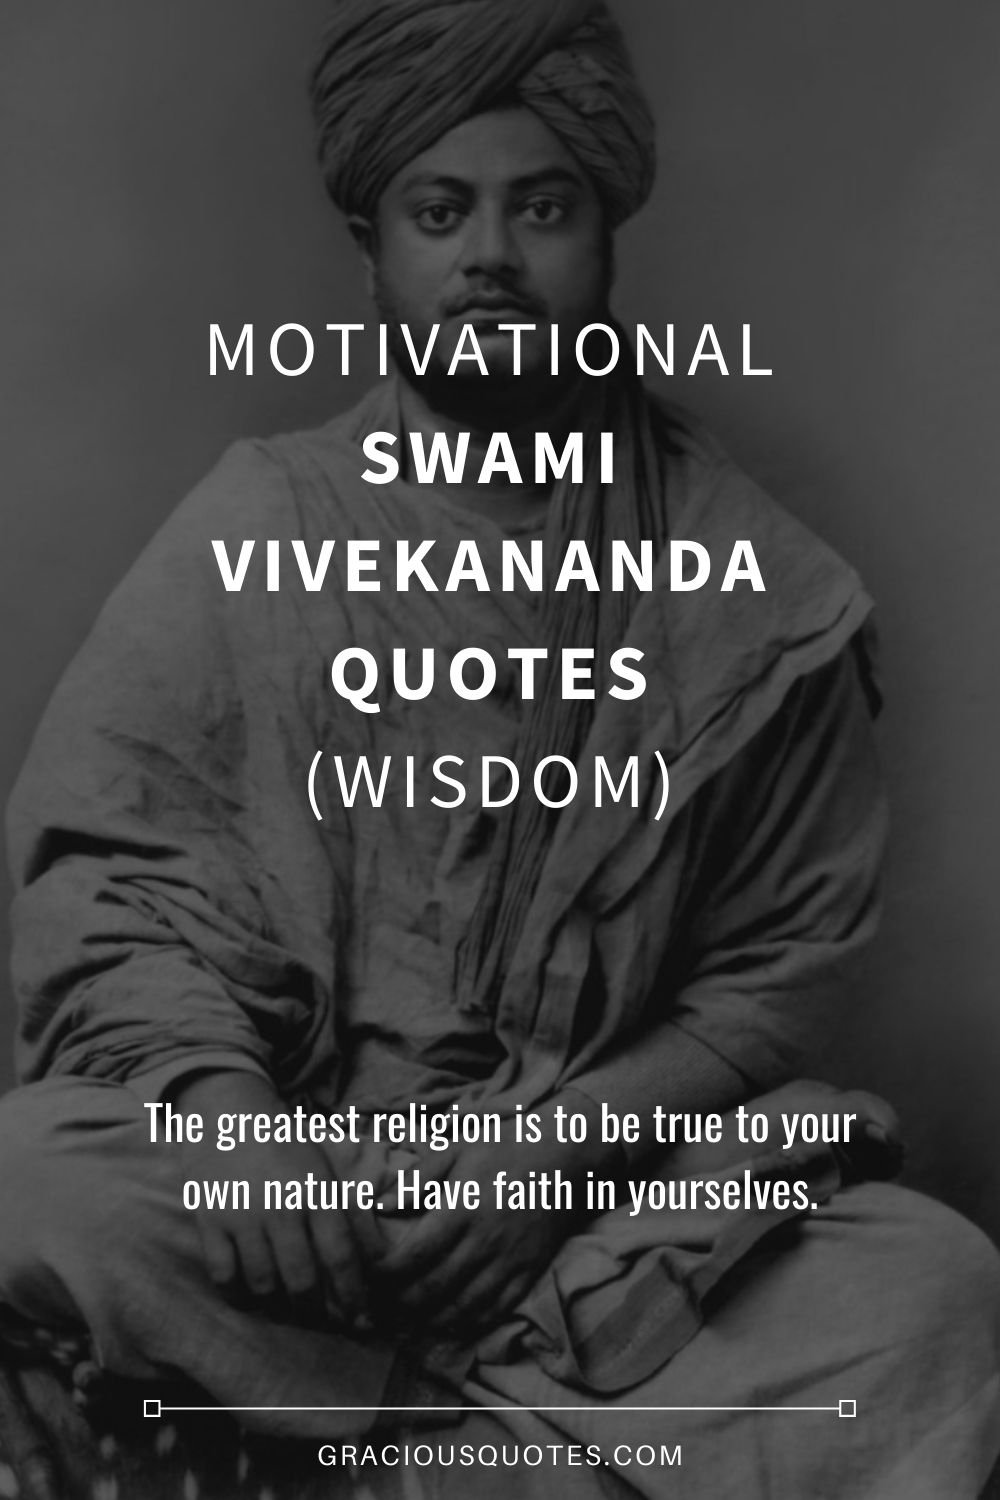 Motivational Swami Vivekananda Quotes (WISDOM) - Gracious Quotes